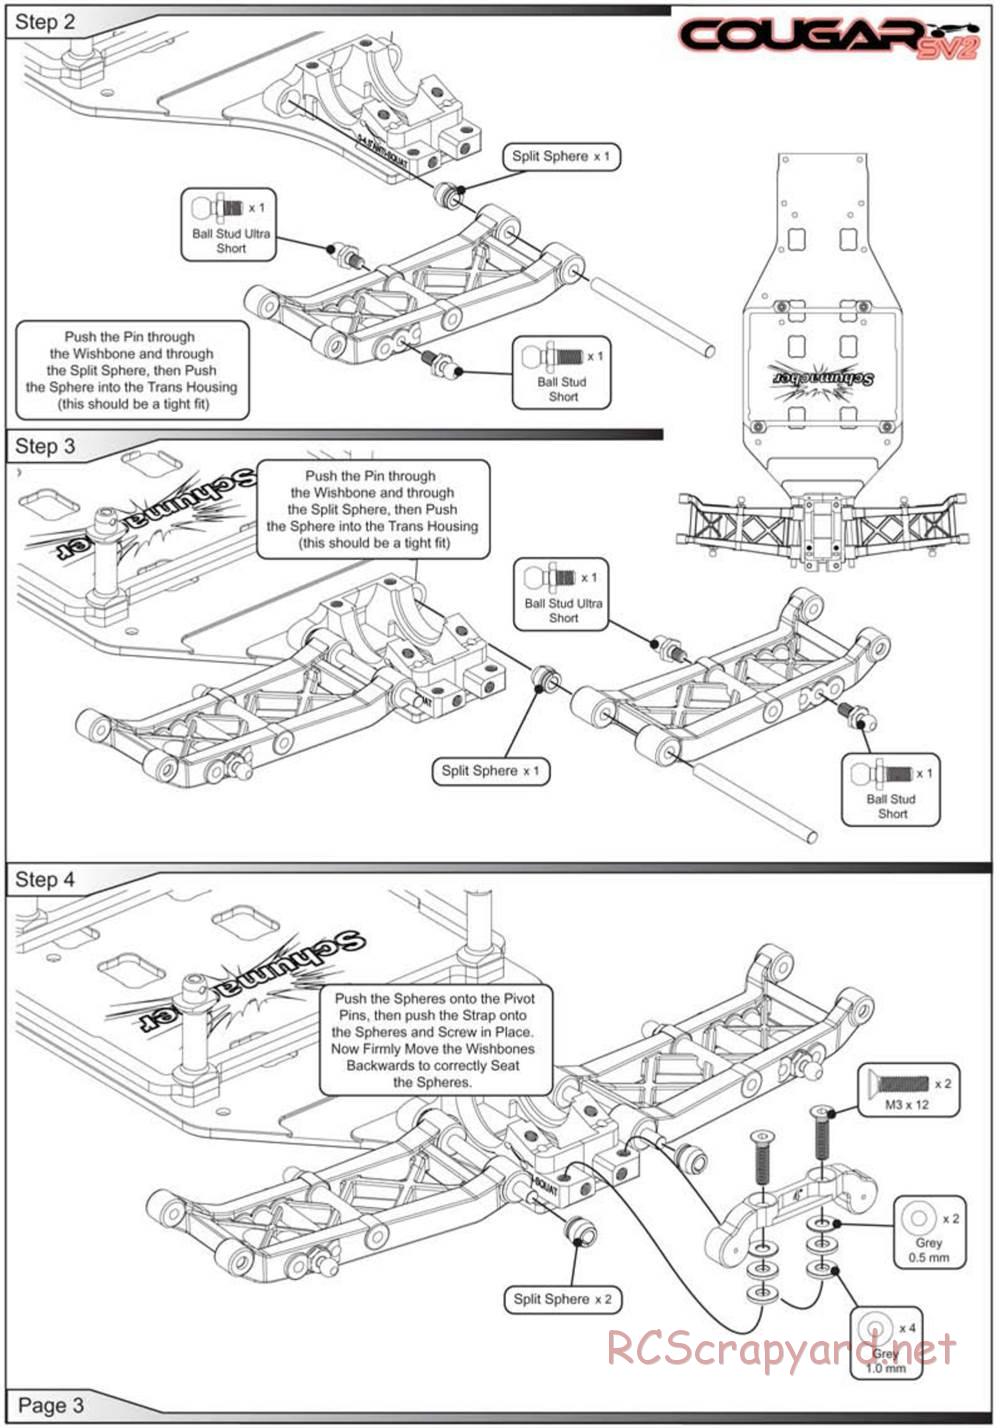 Schumacher - Cougar SV2 - Manual - Page 4